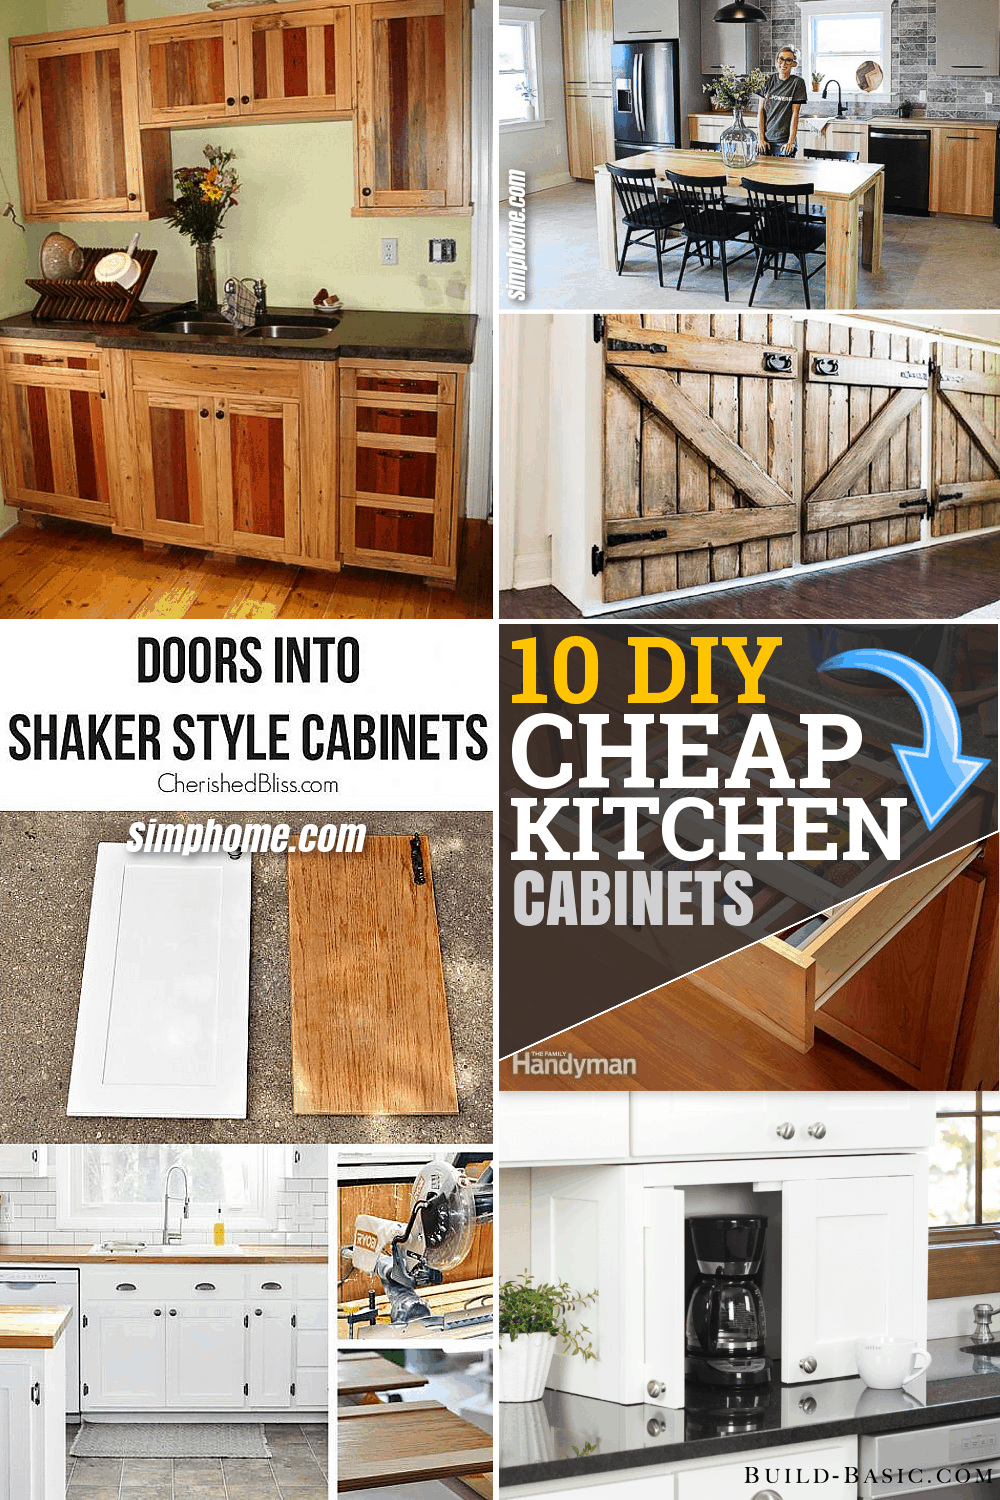 10 DIY Cheap Kitchen Cabinet Projects via Simphome.com Pinterest featured Image